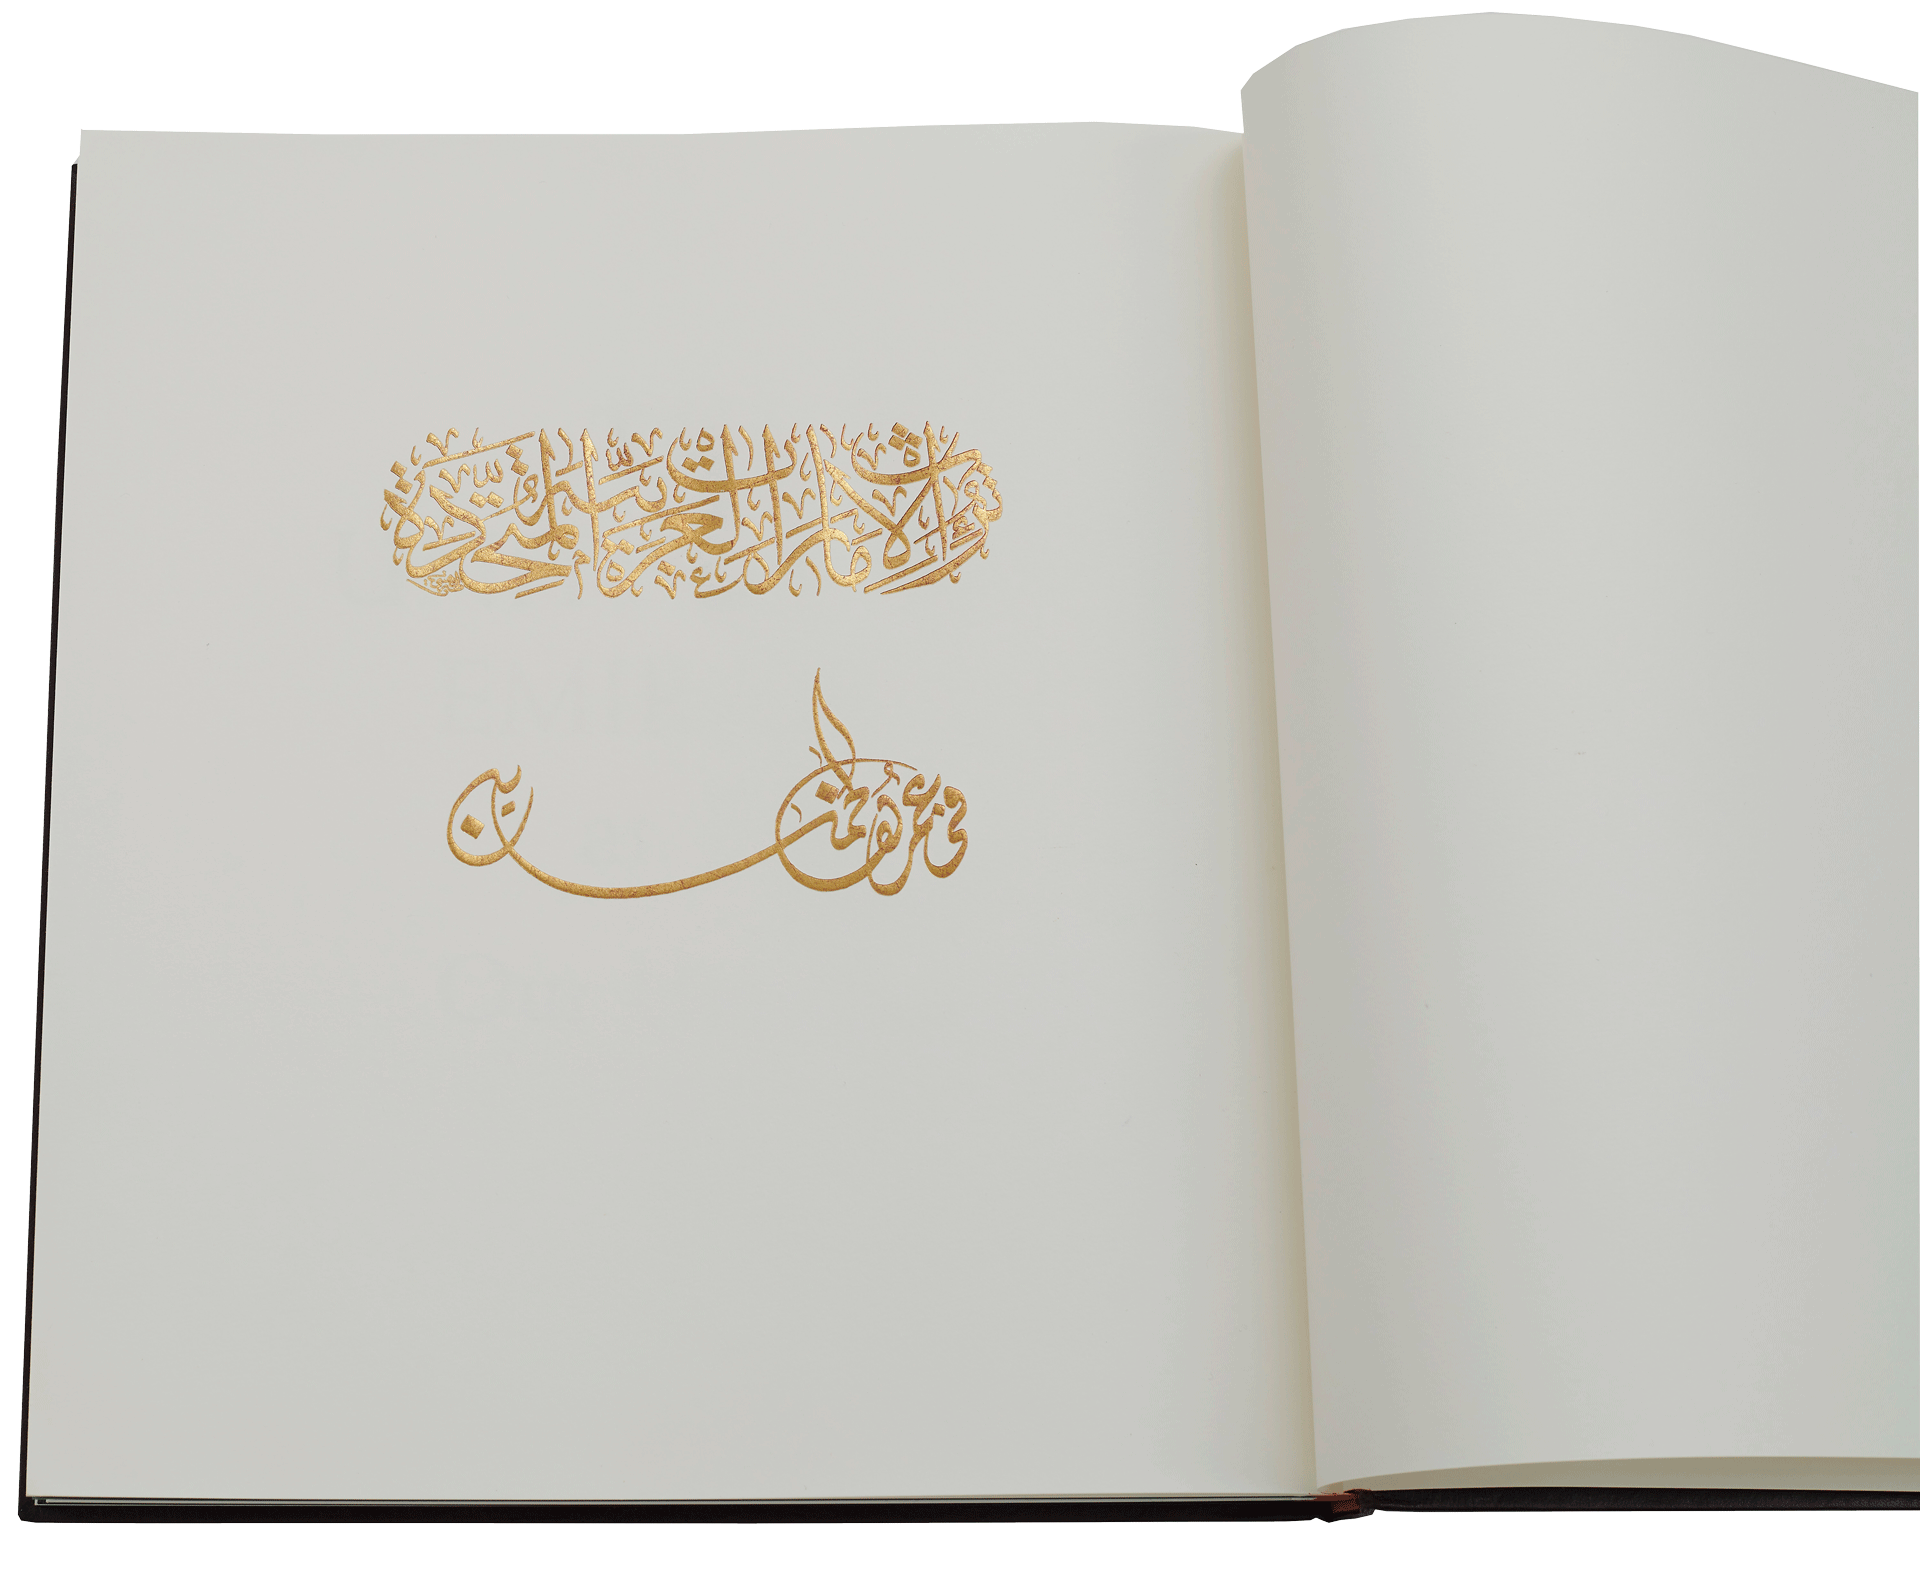 The Arabic title page.<small><a href="https://www.facsimile-editions.com/copyright/">© Copyright 2022 Facsimile Editions Ltd</a></small>